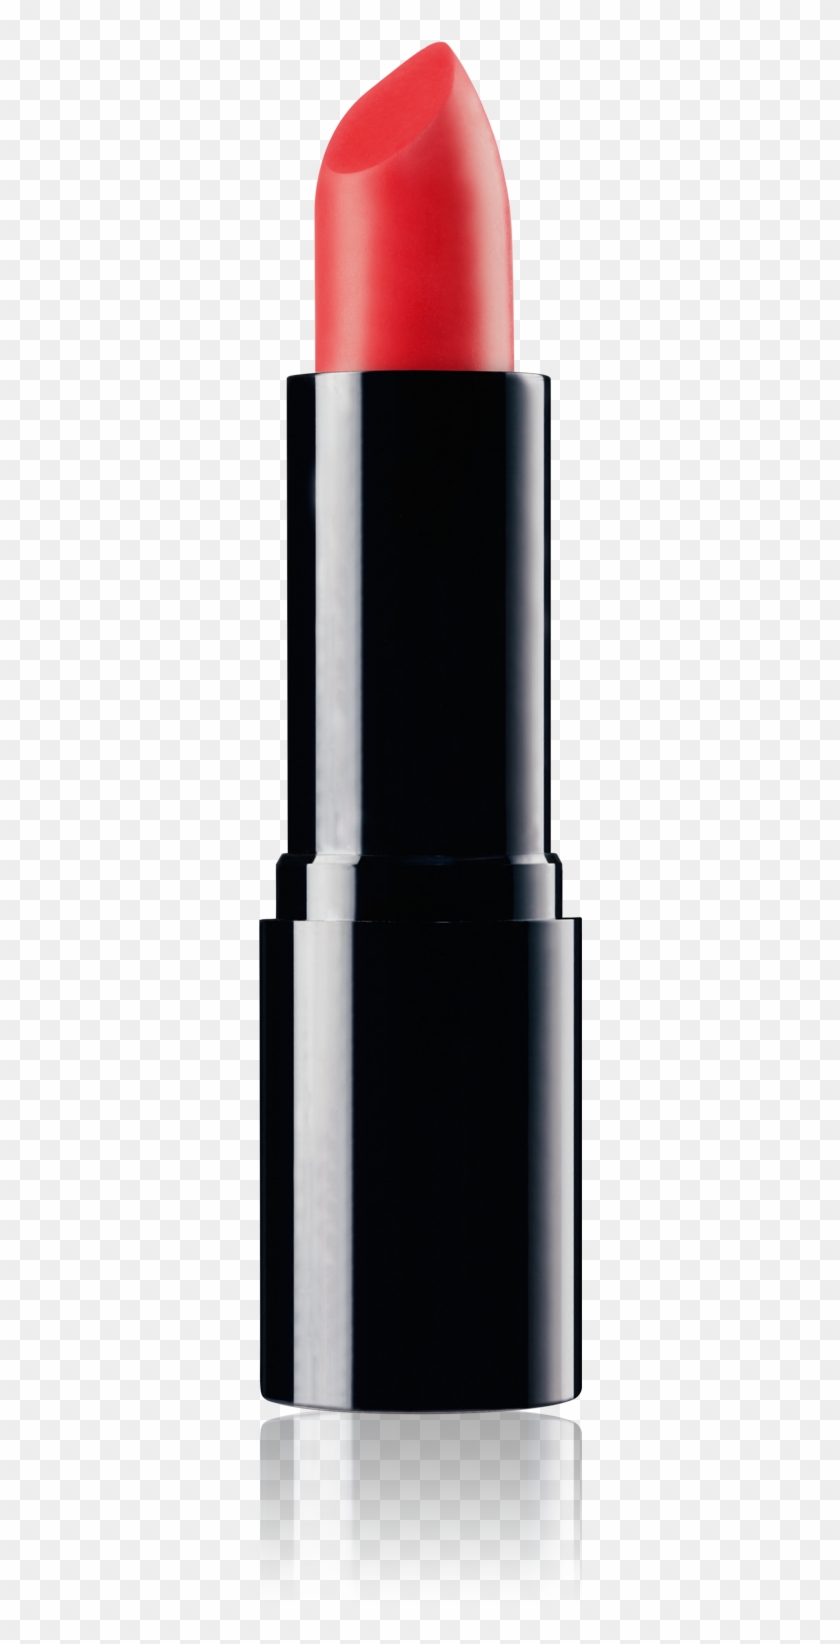 Lipstick Clipart Small - Lipstick Png #166587